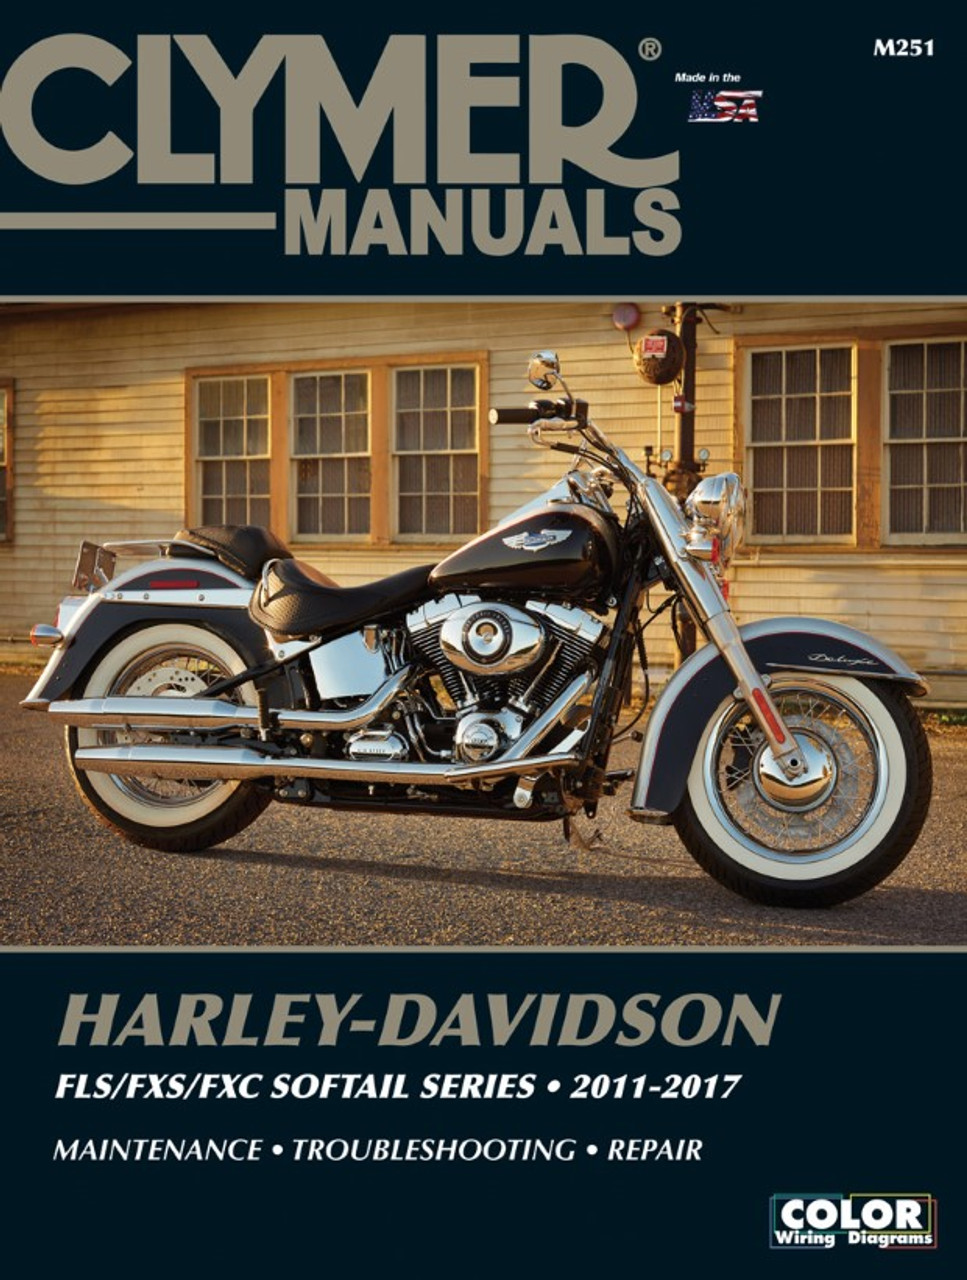 HARLEY-DAVIDSON Heritage Softail Classic (2011-2012) Specs